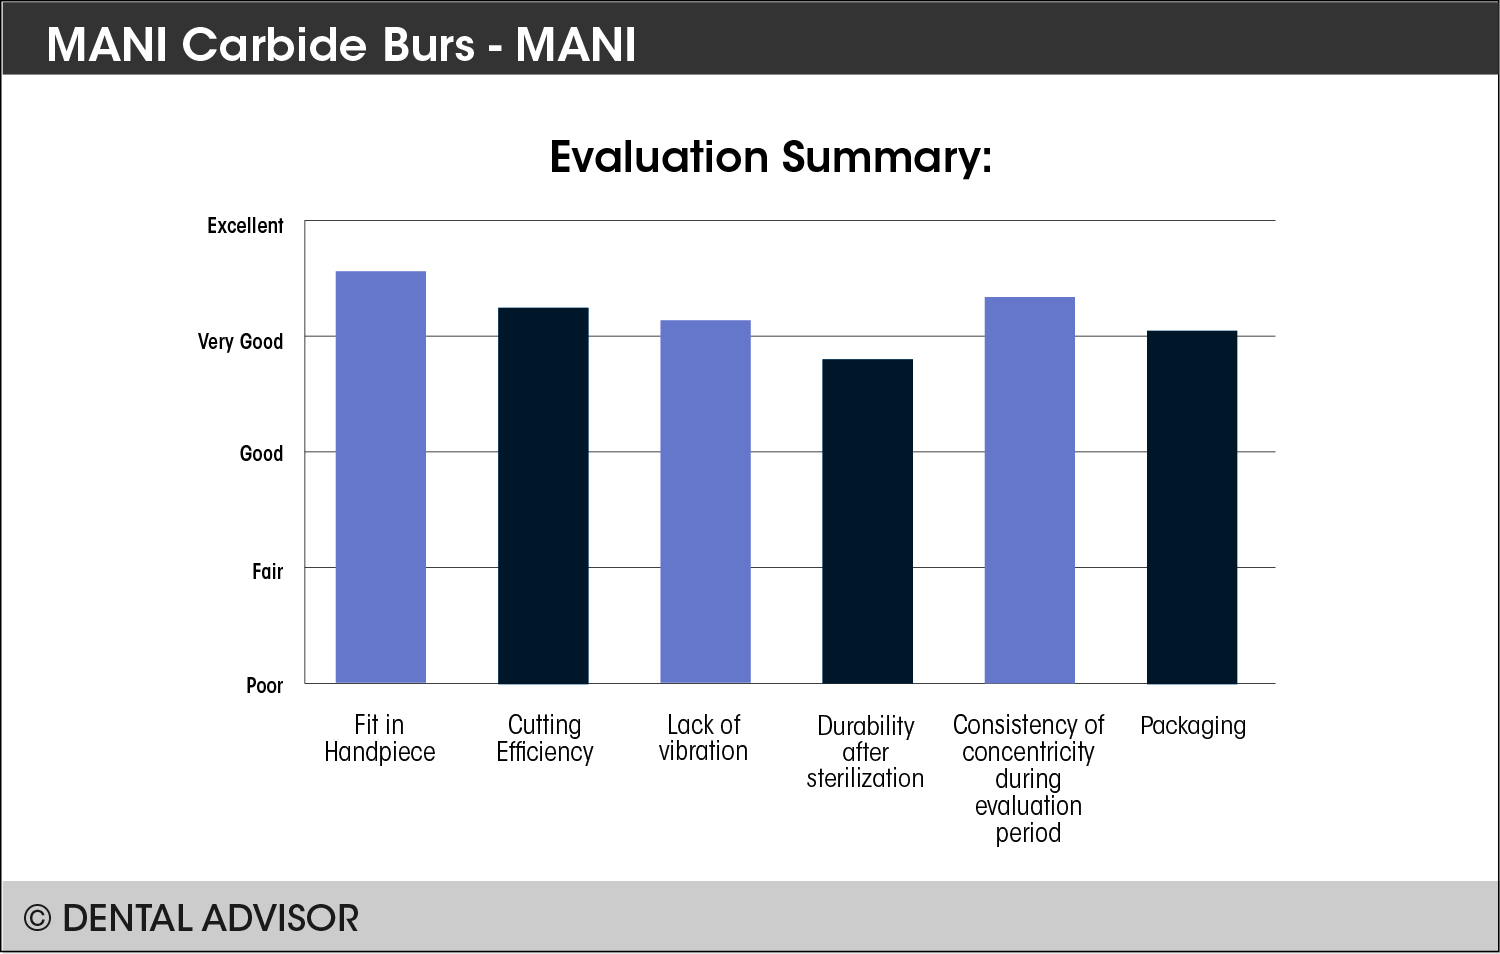 MANI Carbide Burs summary